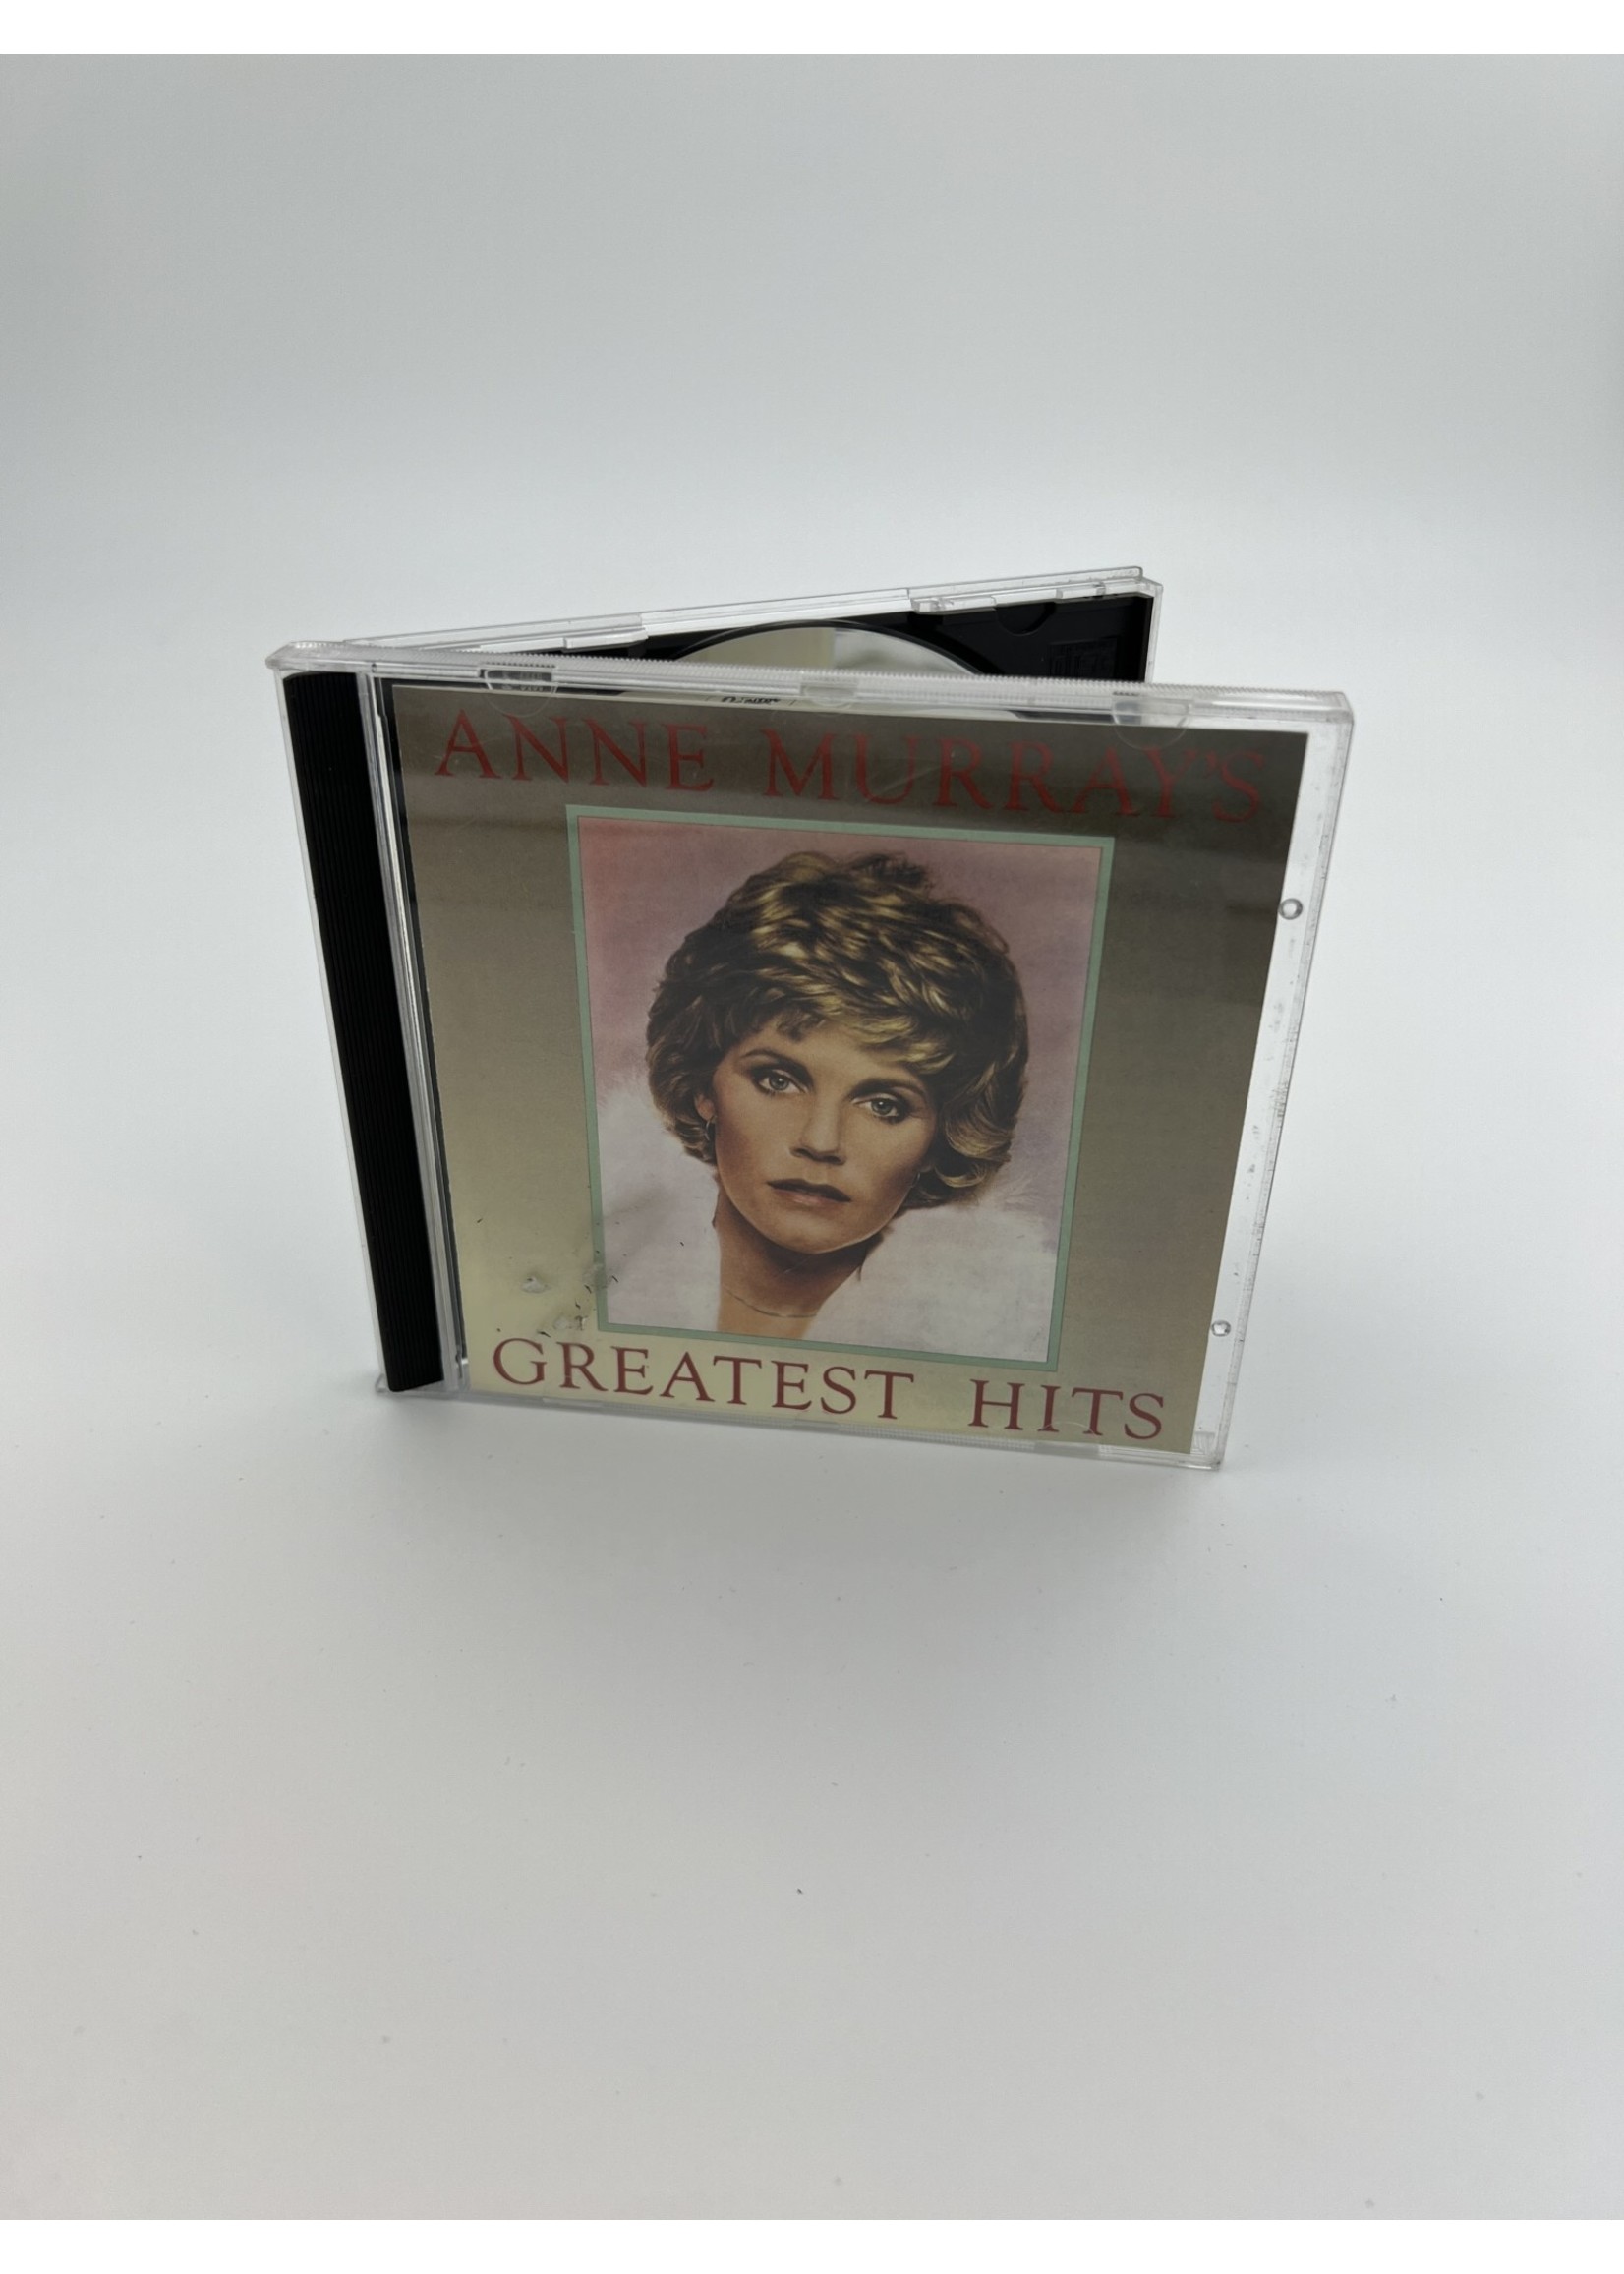 CD Anne Murrays Greatest Hits Cd